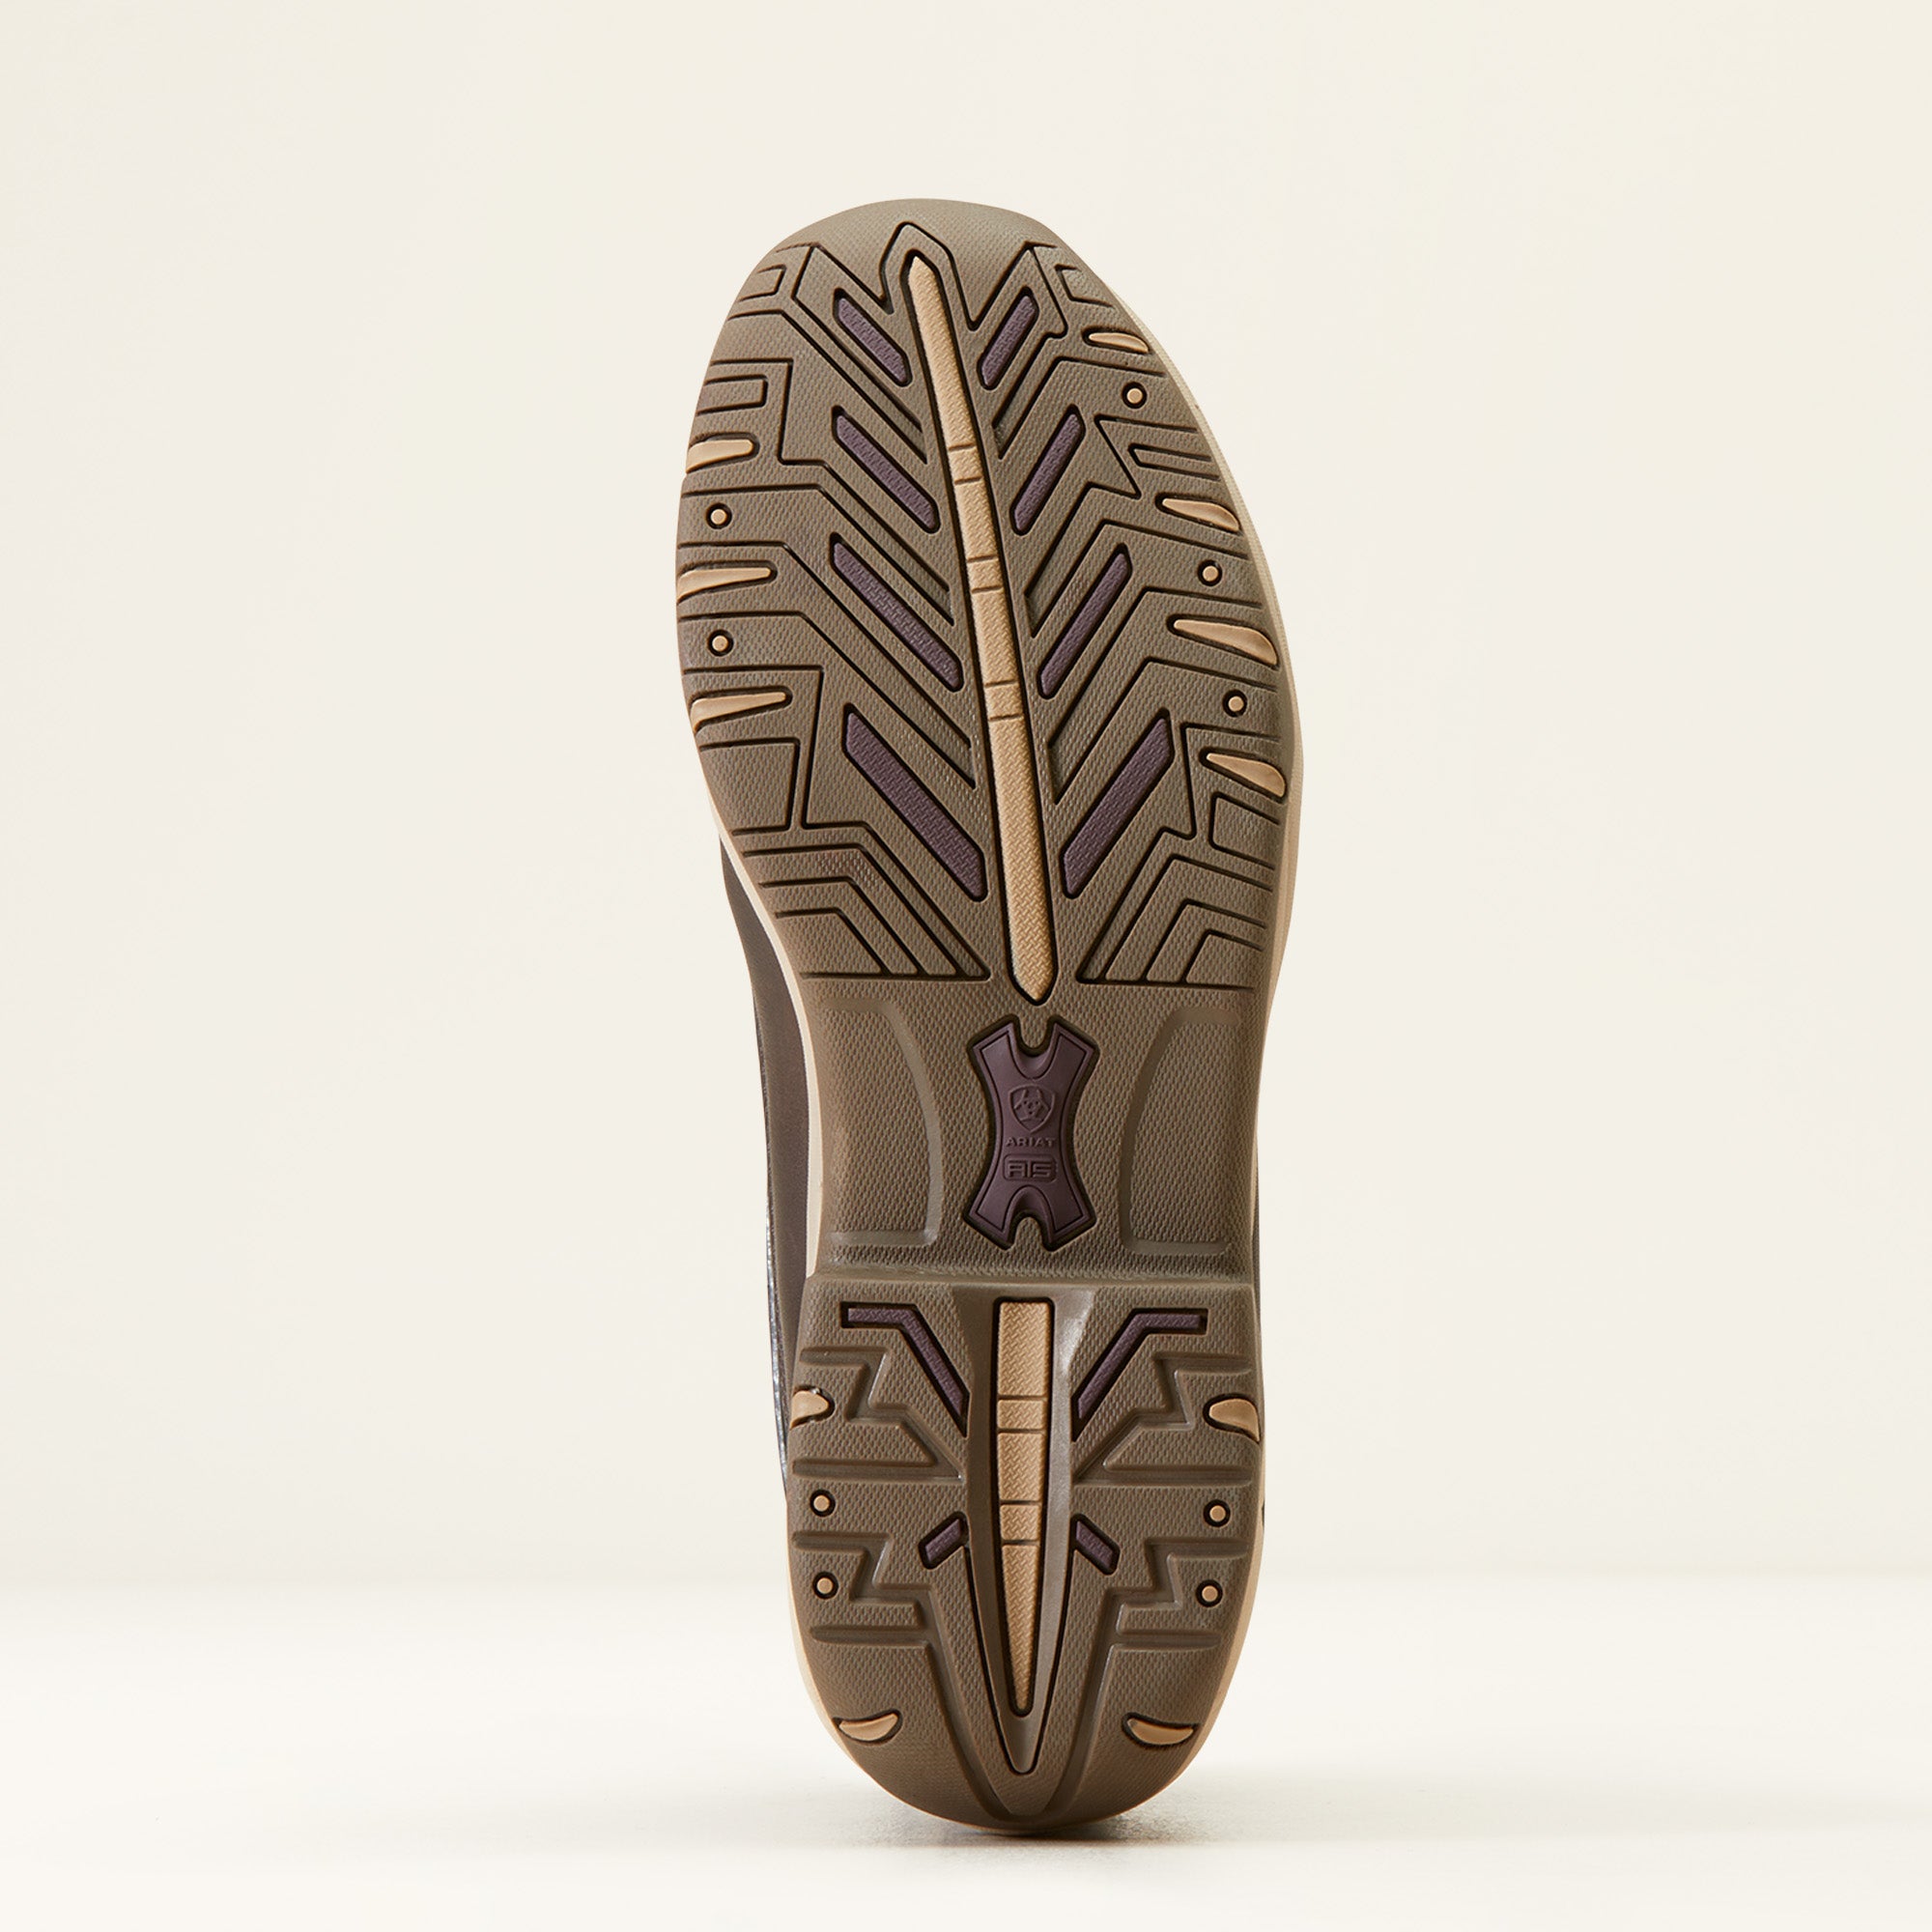 Winter Stiefelette WMS Telluride Waterproof Insulated Boot dark brown | 10046974